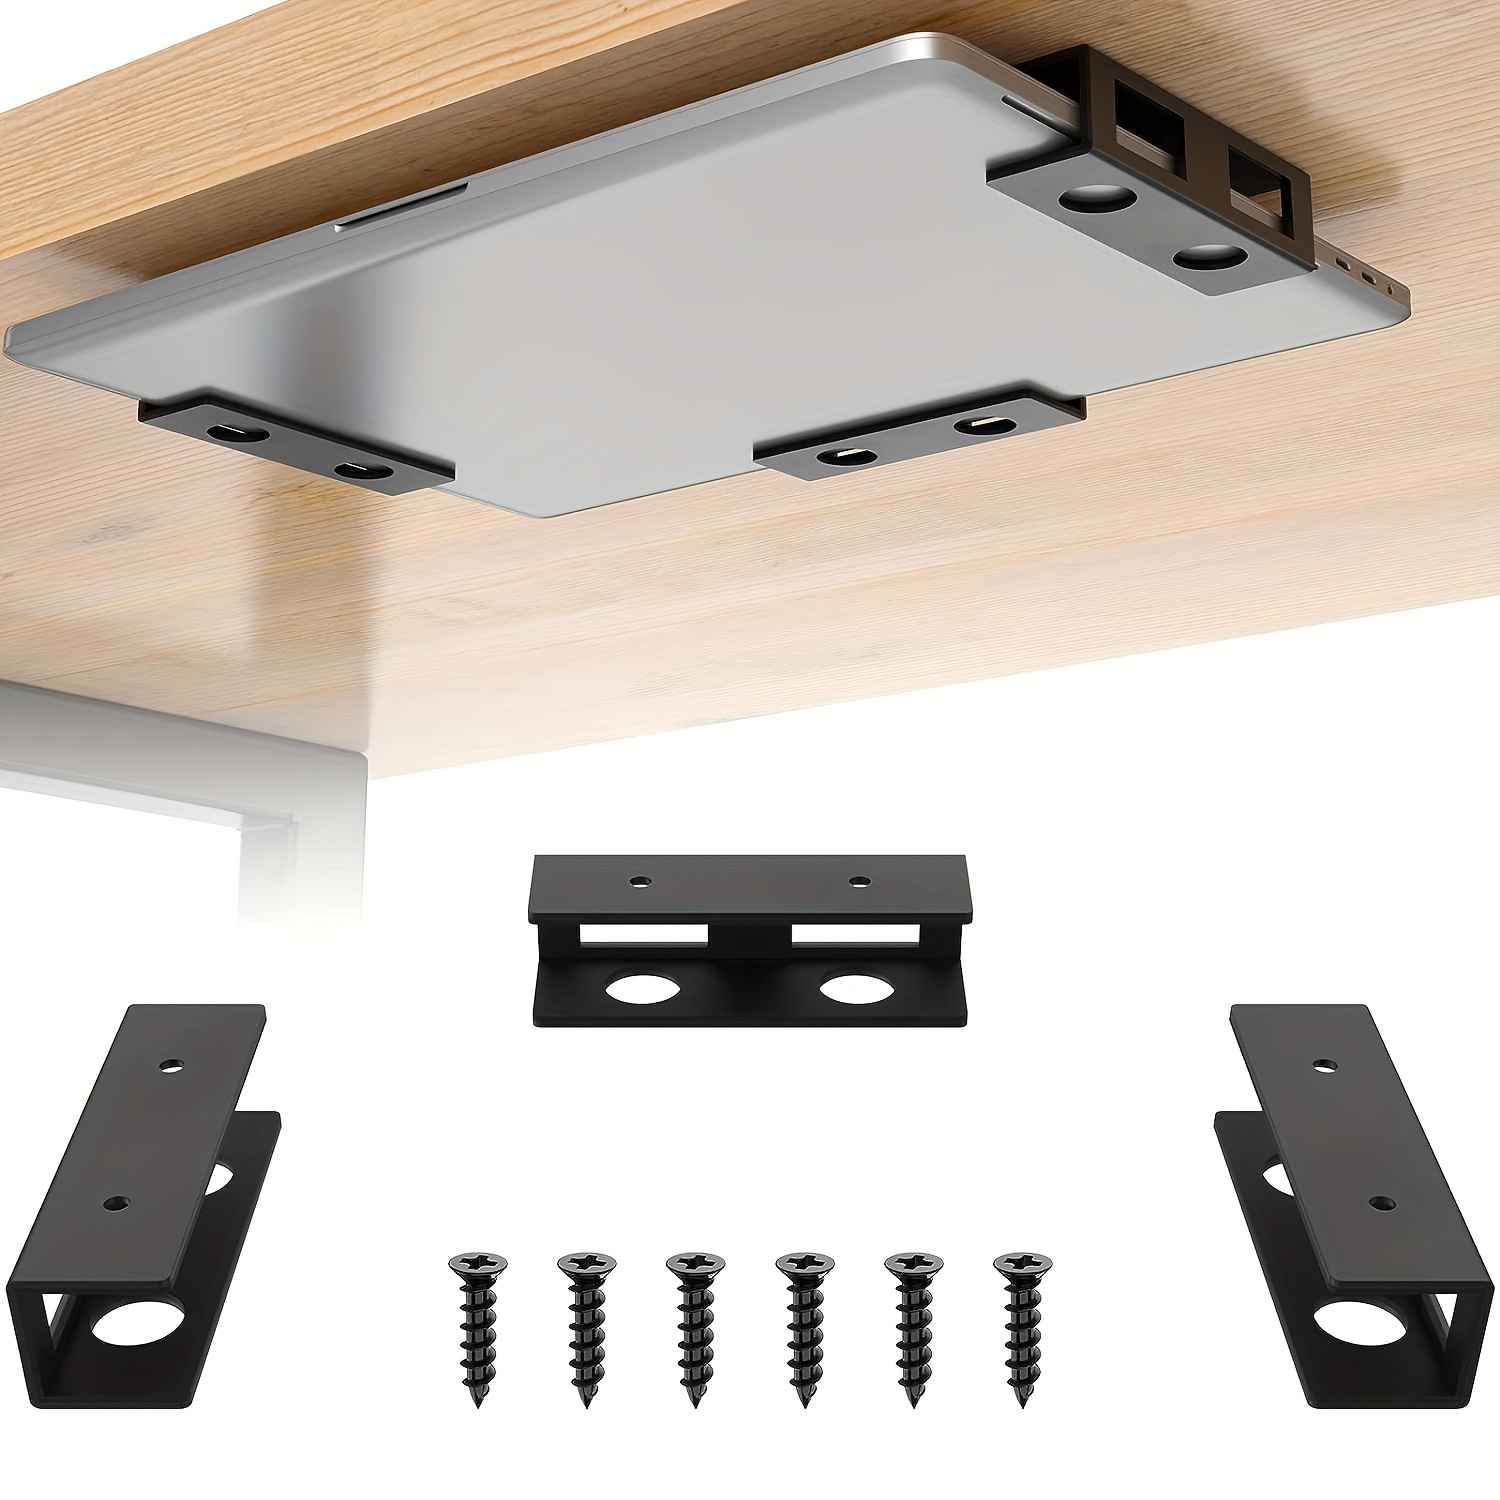 

Black Under Desk Laptop Holder Mount With Screw,under Desk Laptop Mount Bracket,add On Under Table Laptop/keyboard Storage(3pcs)